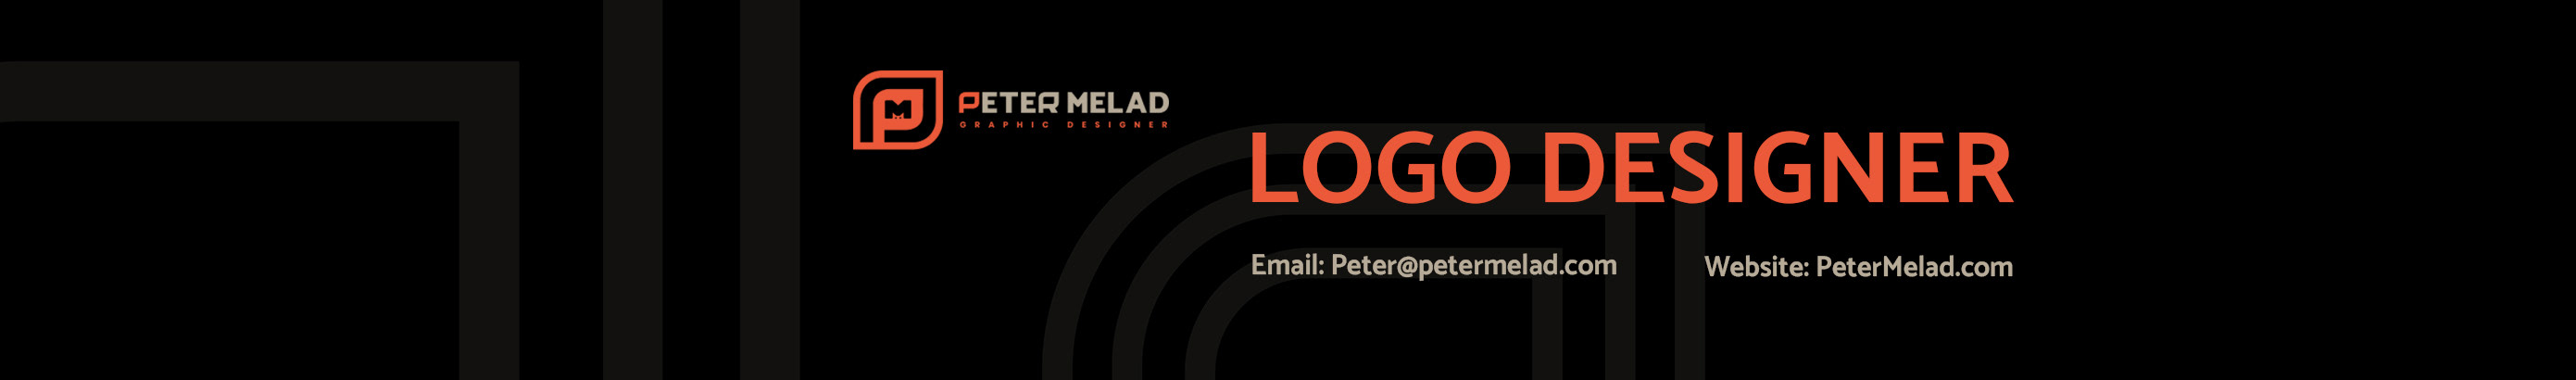 Peter Melad's profile banner